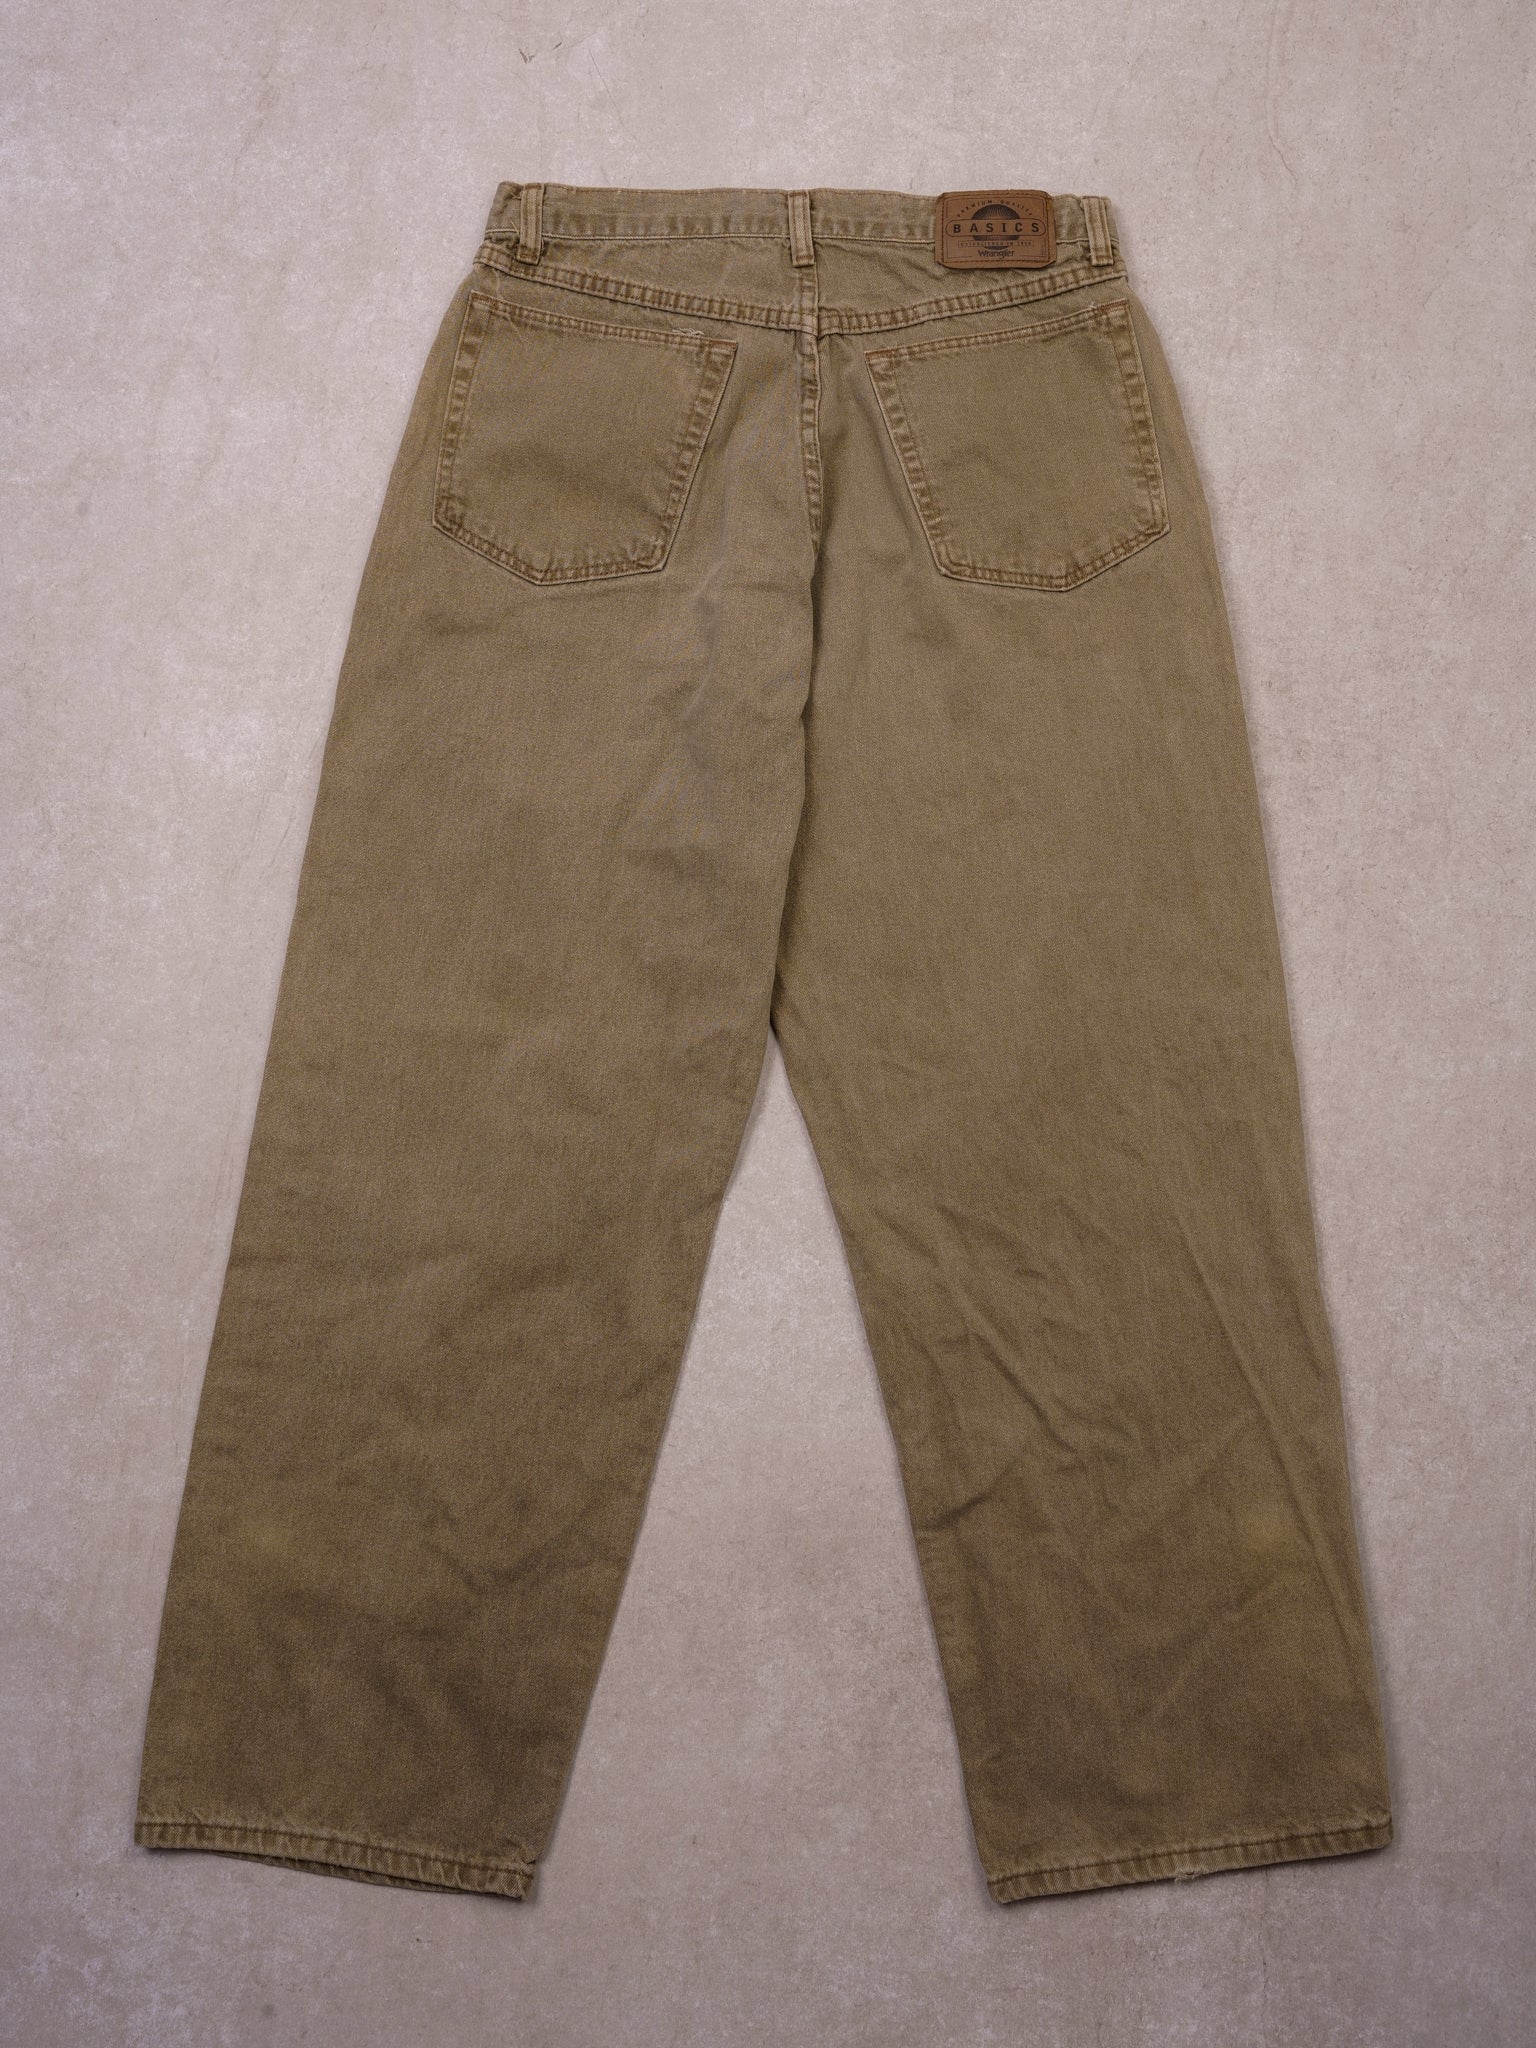 Vintage 90s Sand Wranglers Basics Workwear Pants (30X30)